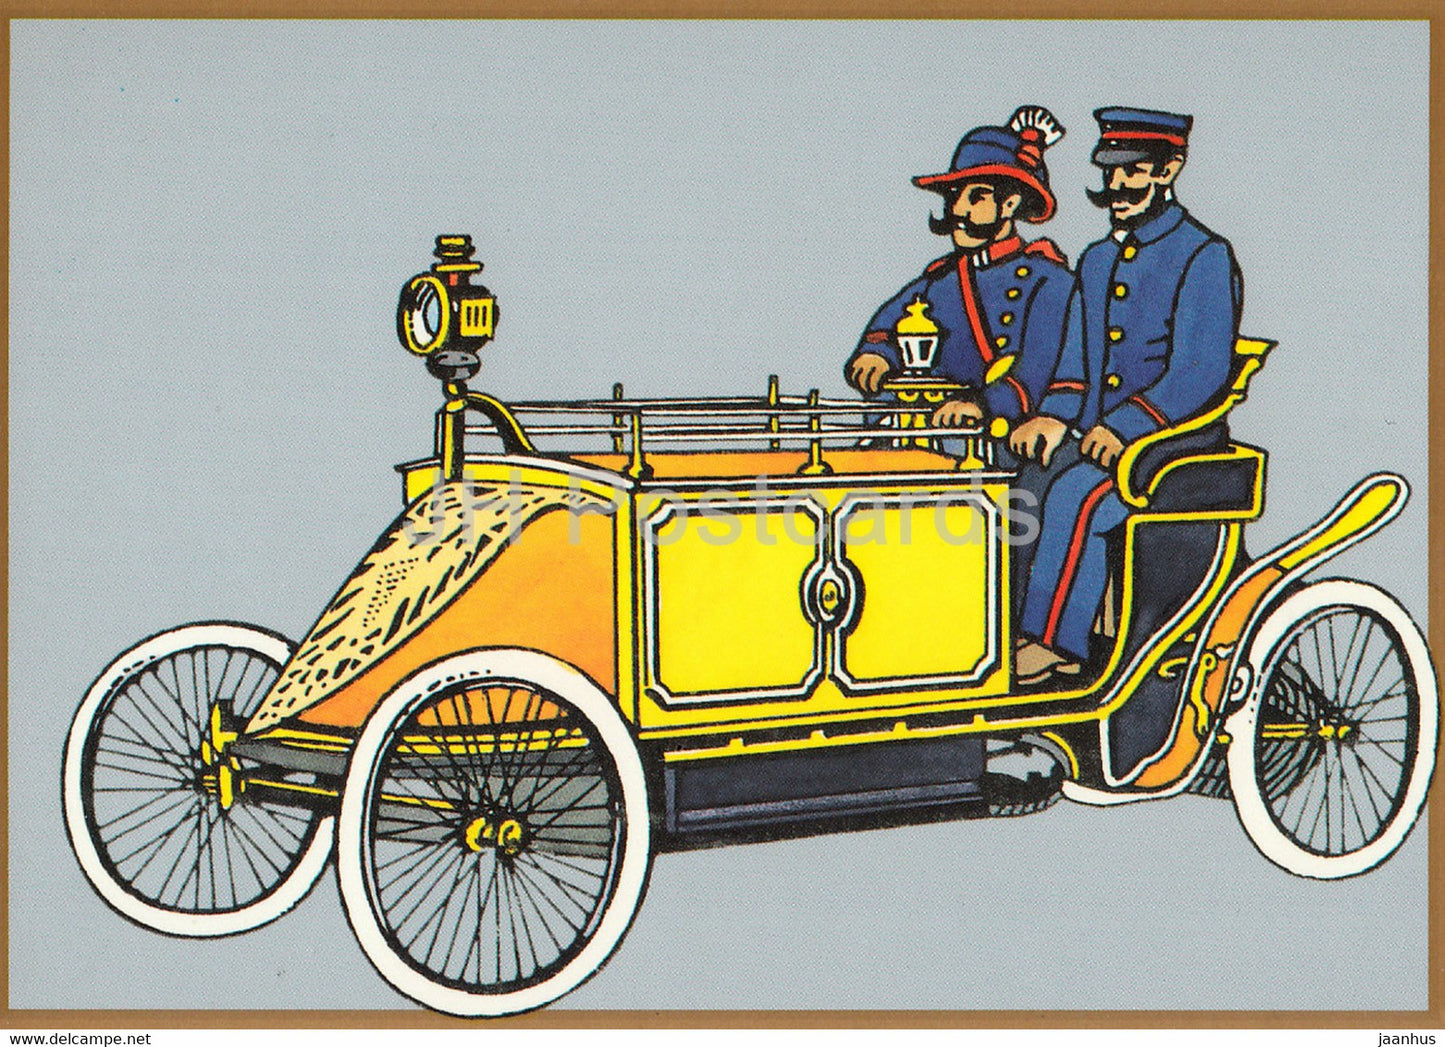 Motorpostwagen Berlin um 1900 - Postal Car - illustration - Germany - unused - JH Postcards